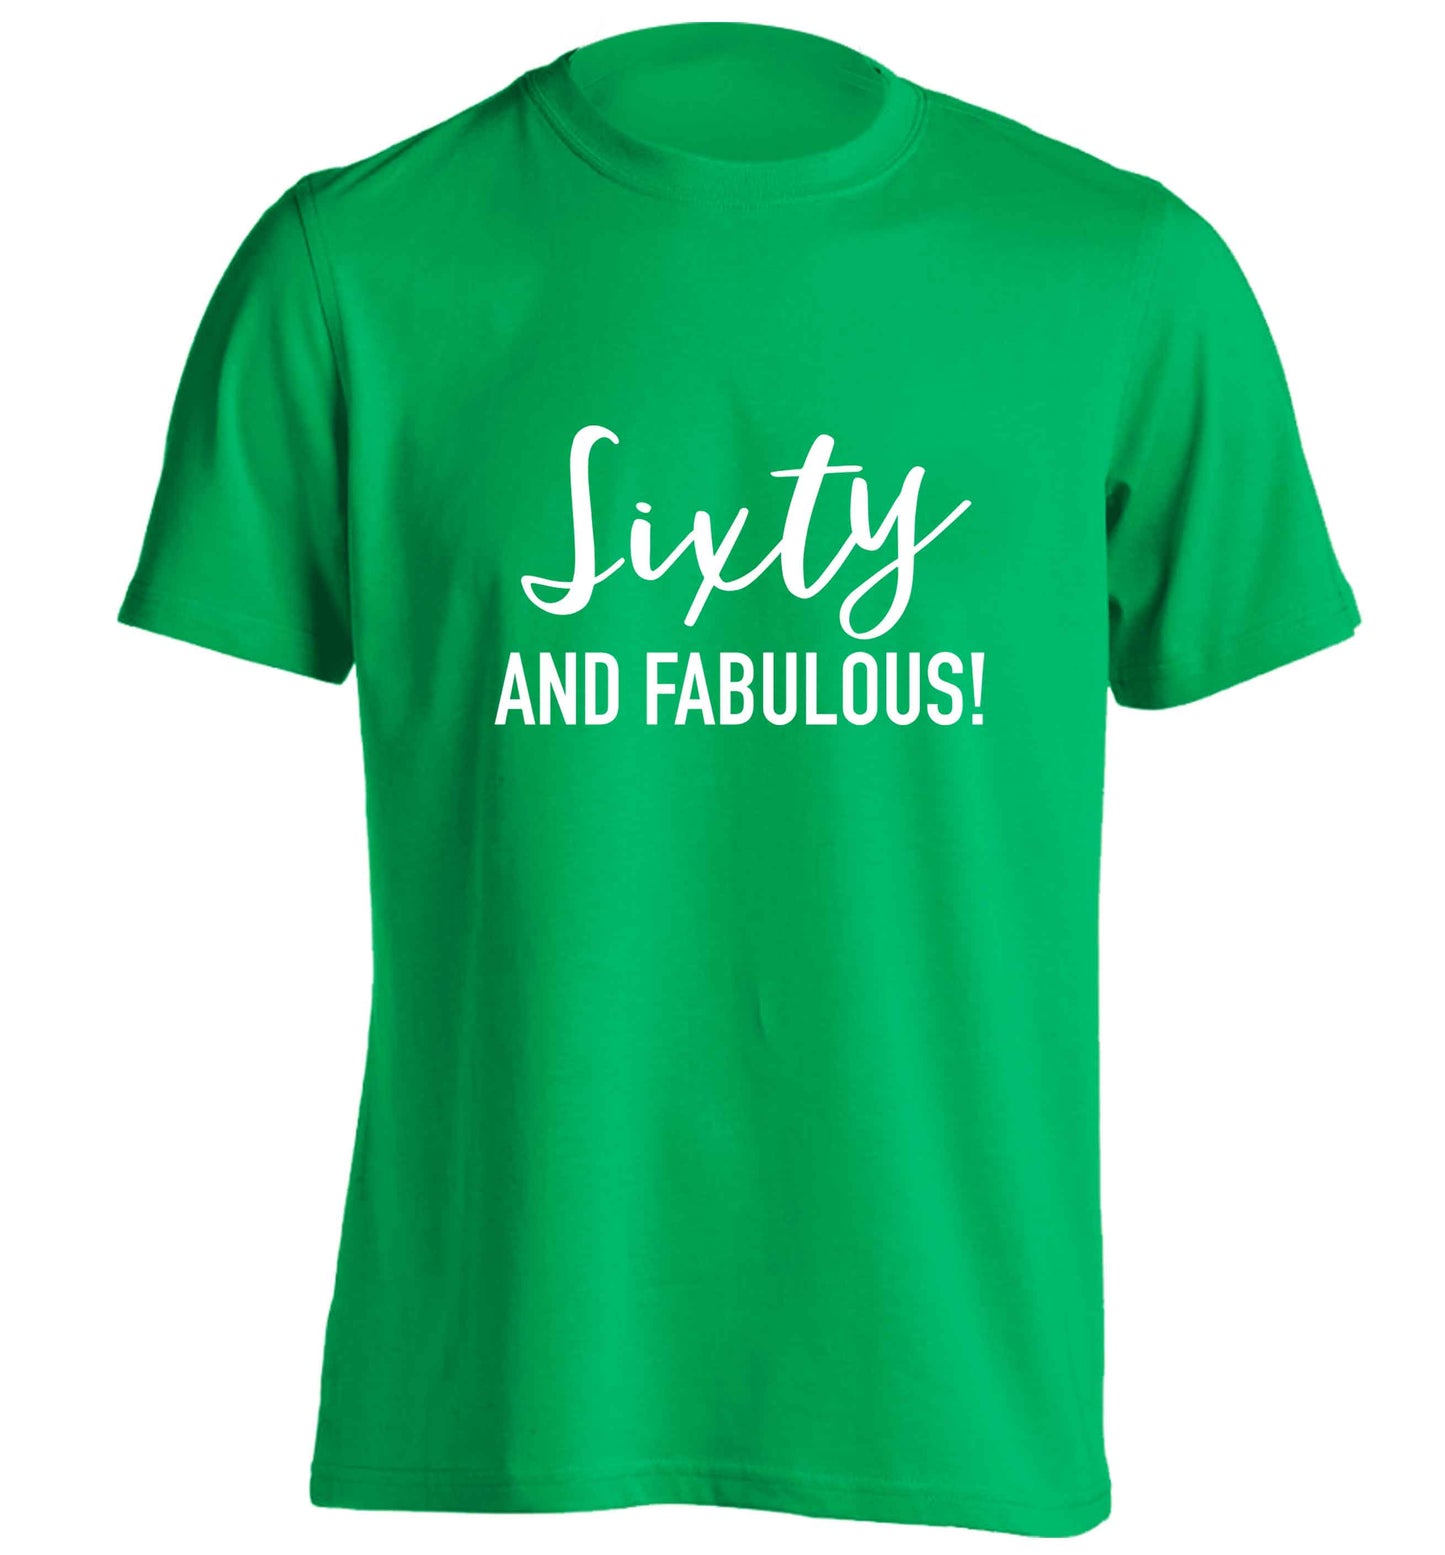 Sixty and fabulous adults unisex green Tshirt 2XL